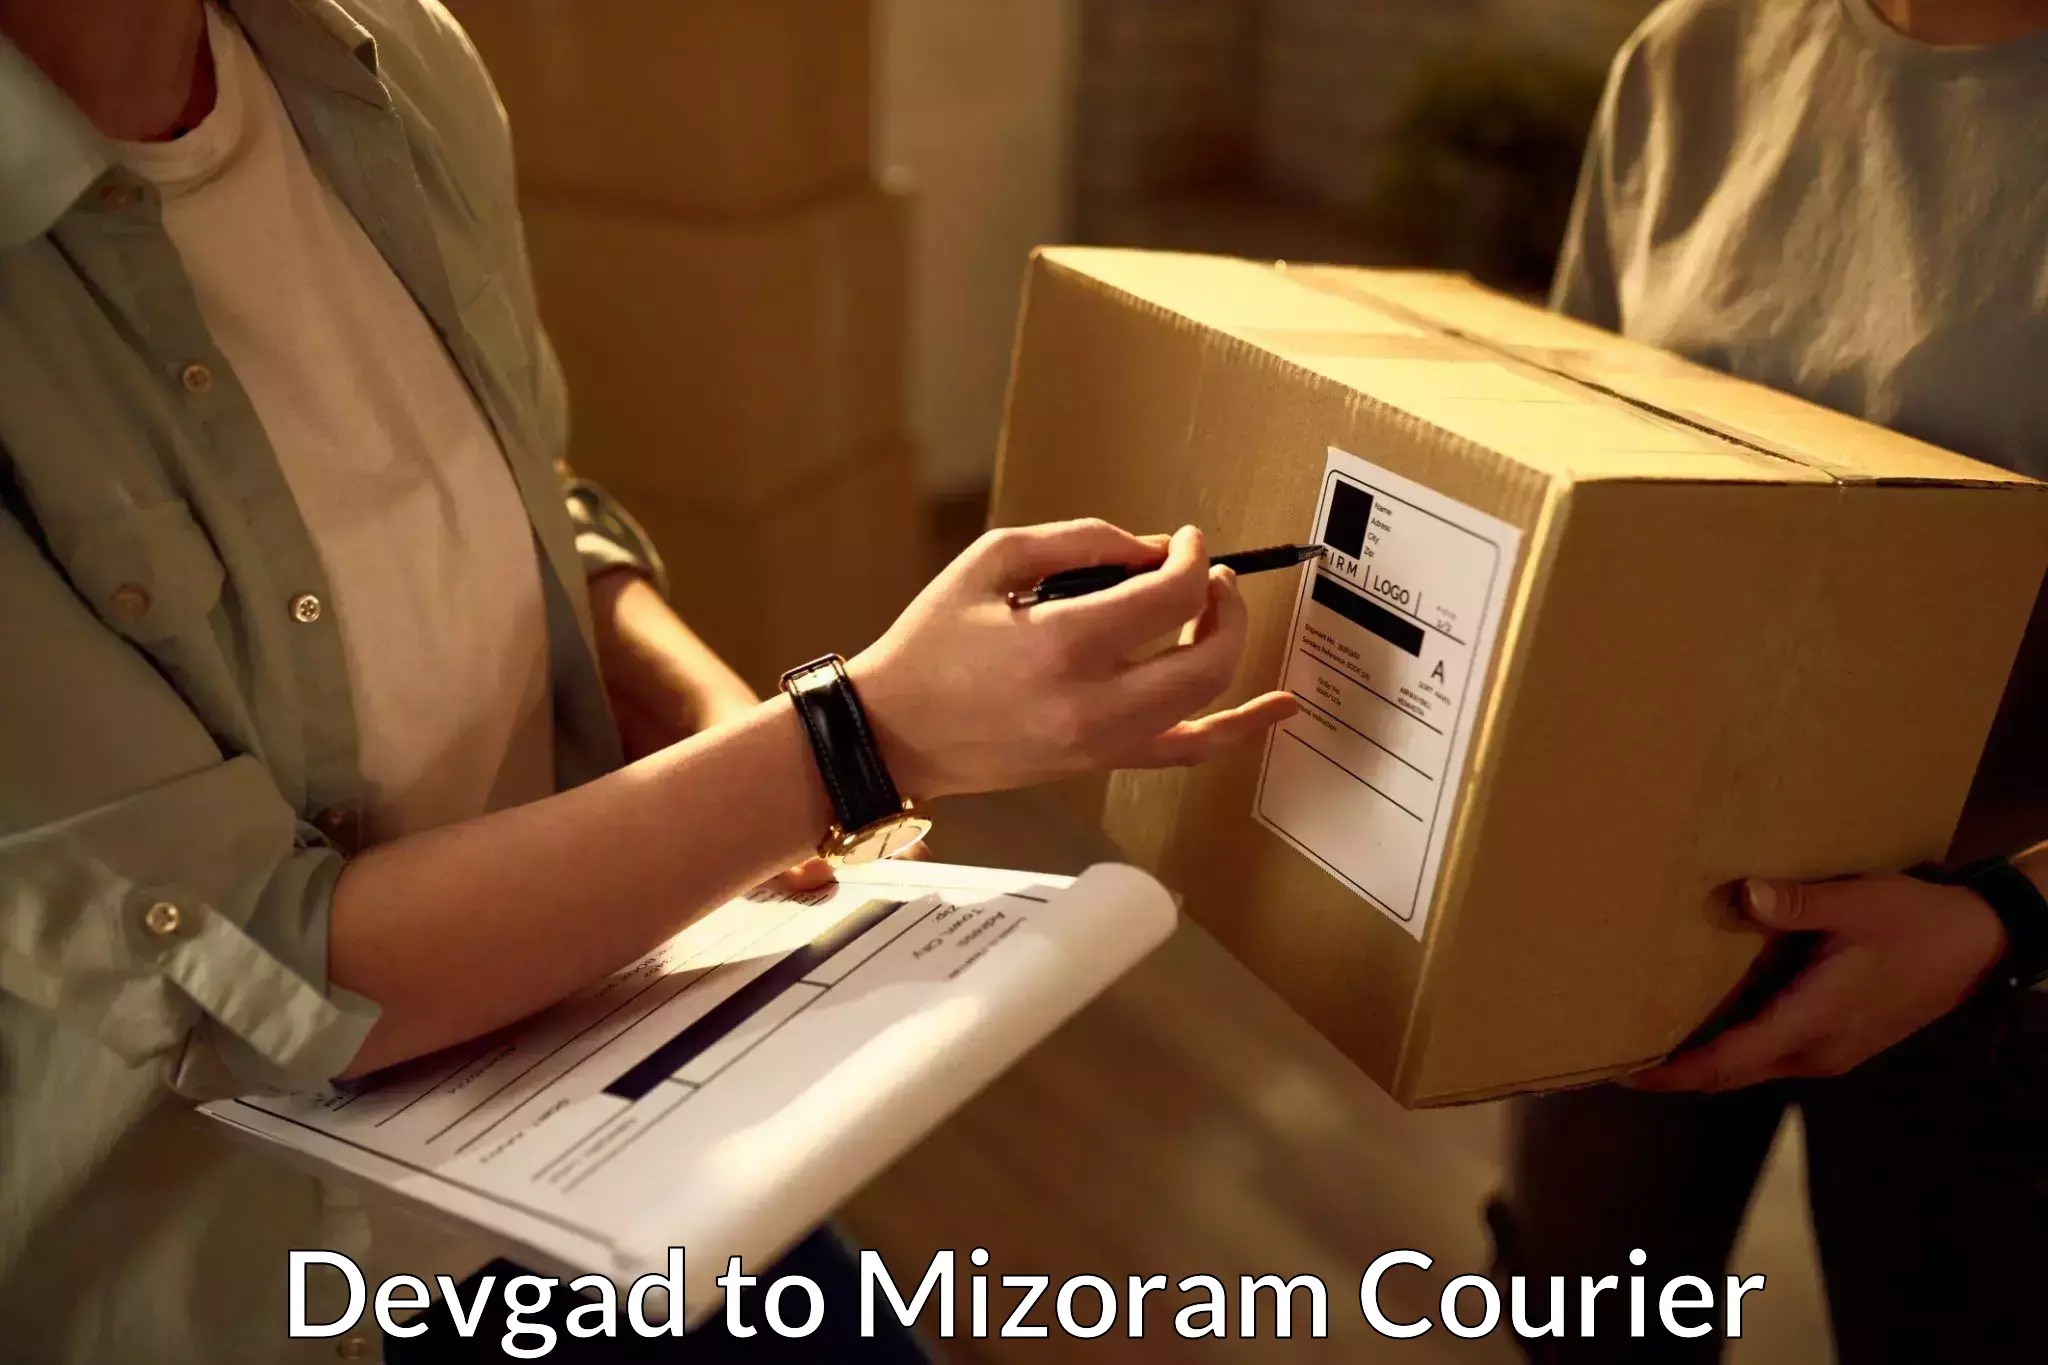 Professional courier handling Devgad to Mizoram